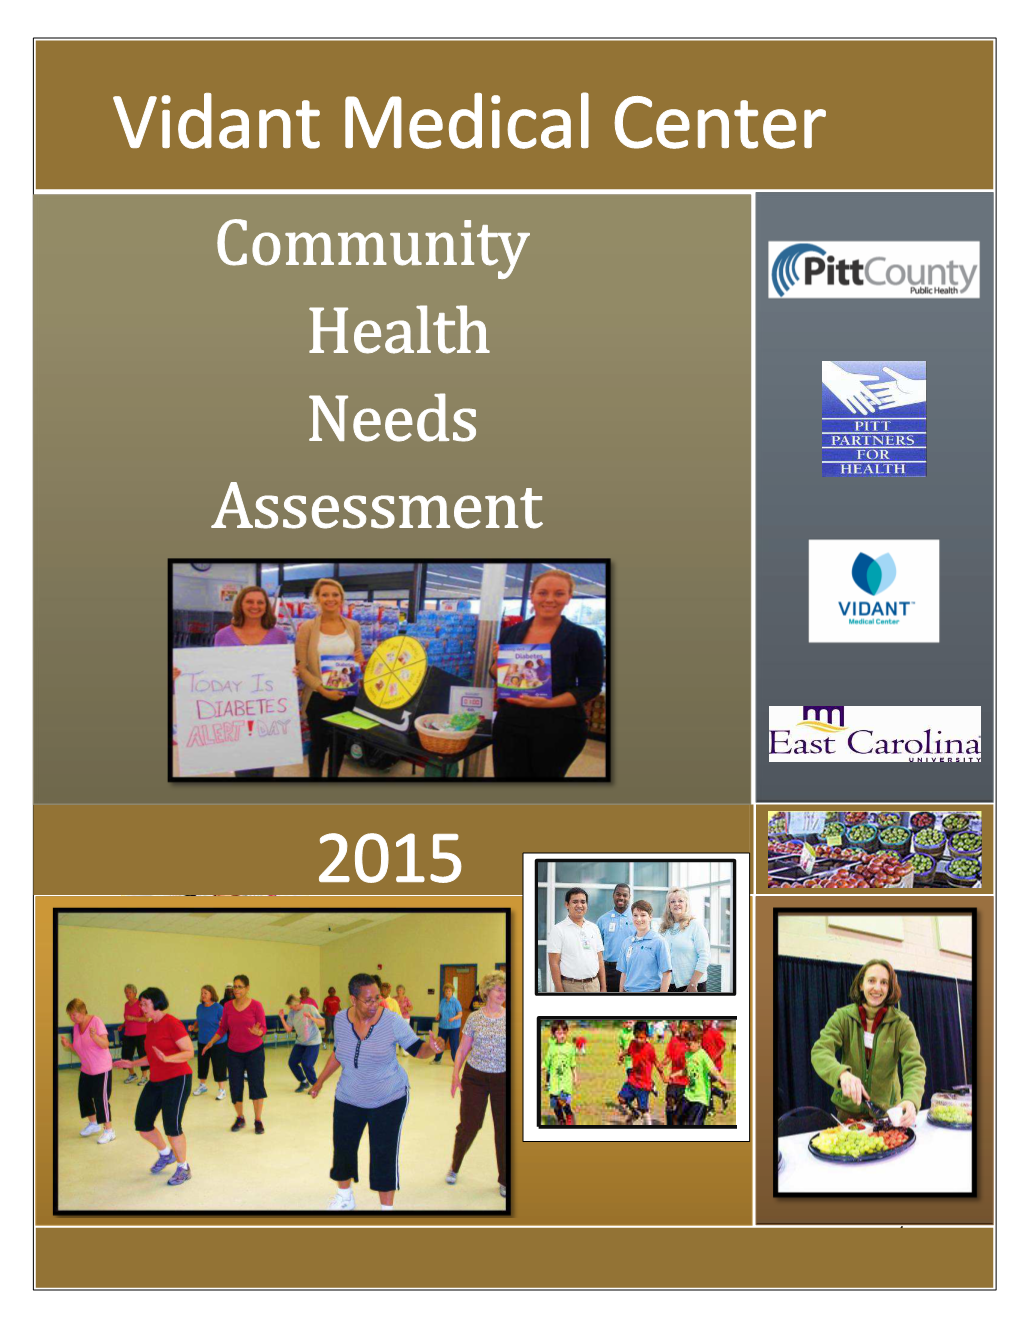 Vidant Medical Center Community Health Needs Assessment